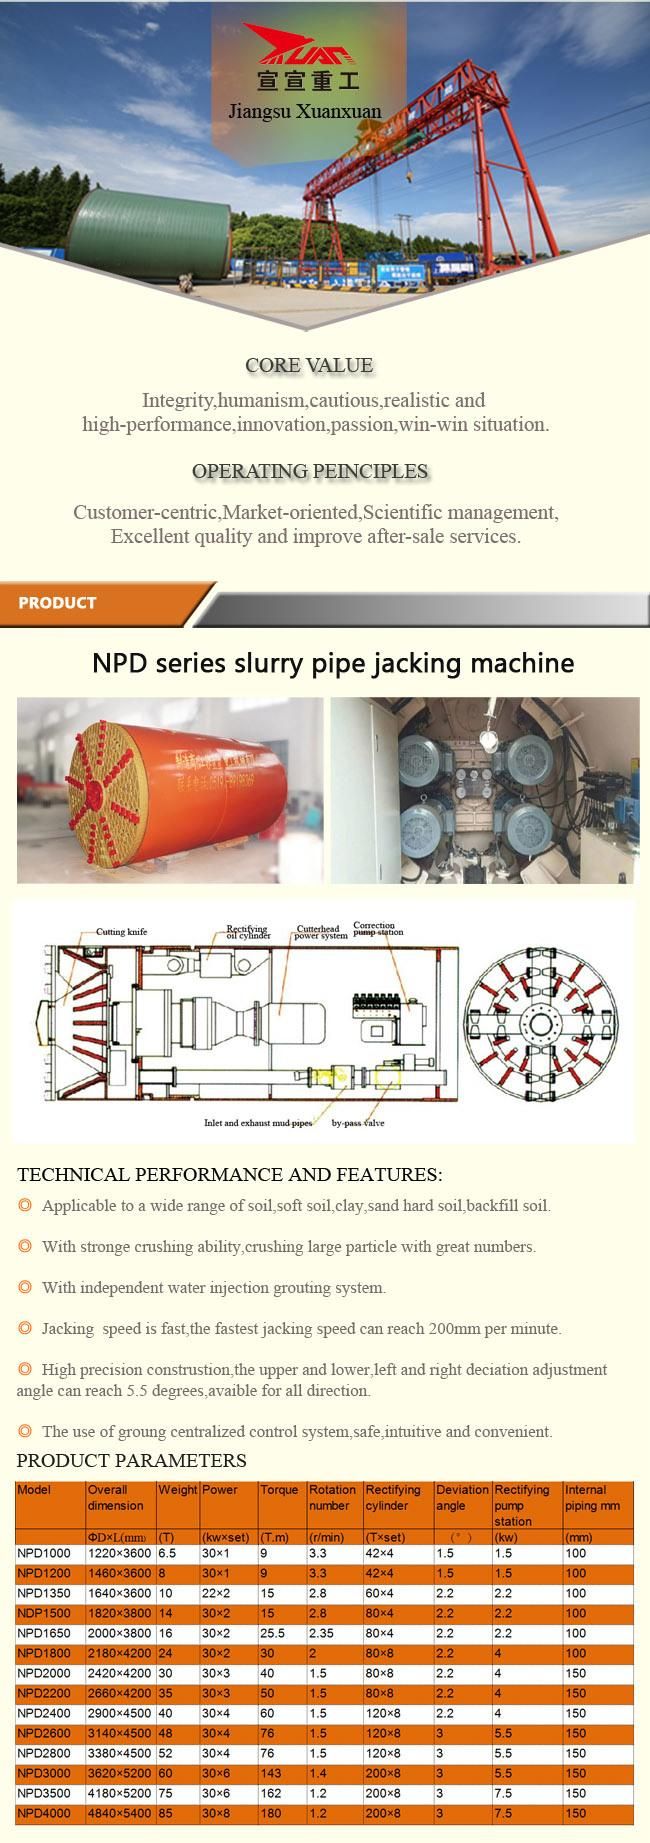 Minitype Pipe Jacking Machine